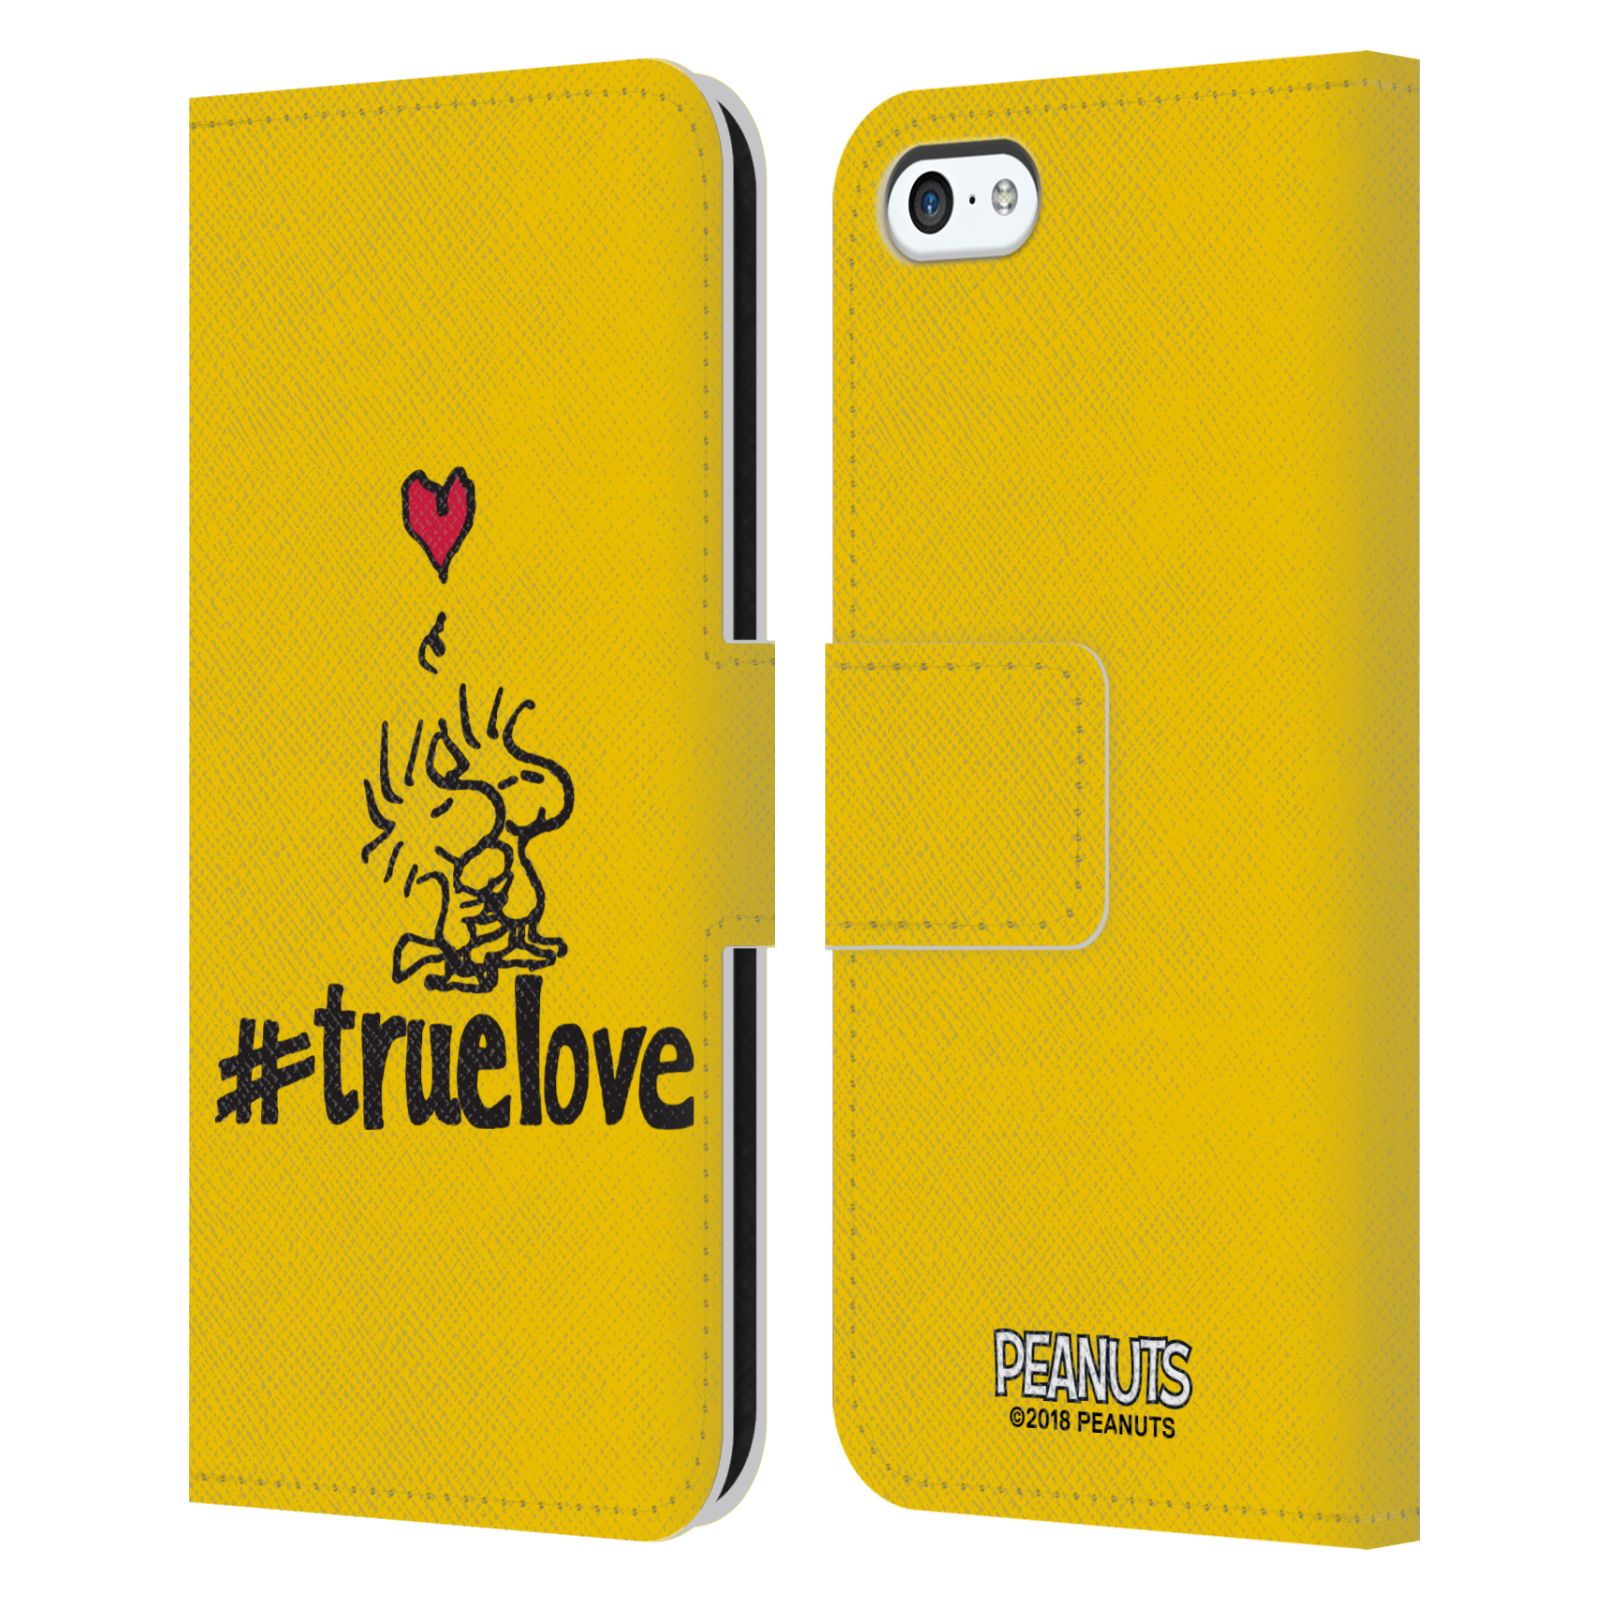 Pouzdro na mobil Apple Iphone 5C - HEAD CASE - Peanuts - Woodstock pravá láska